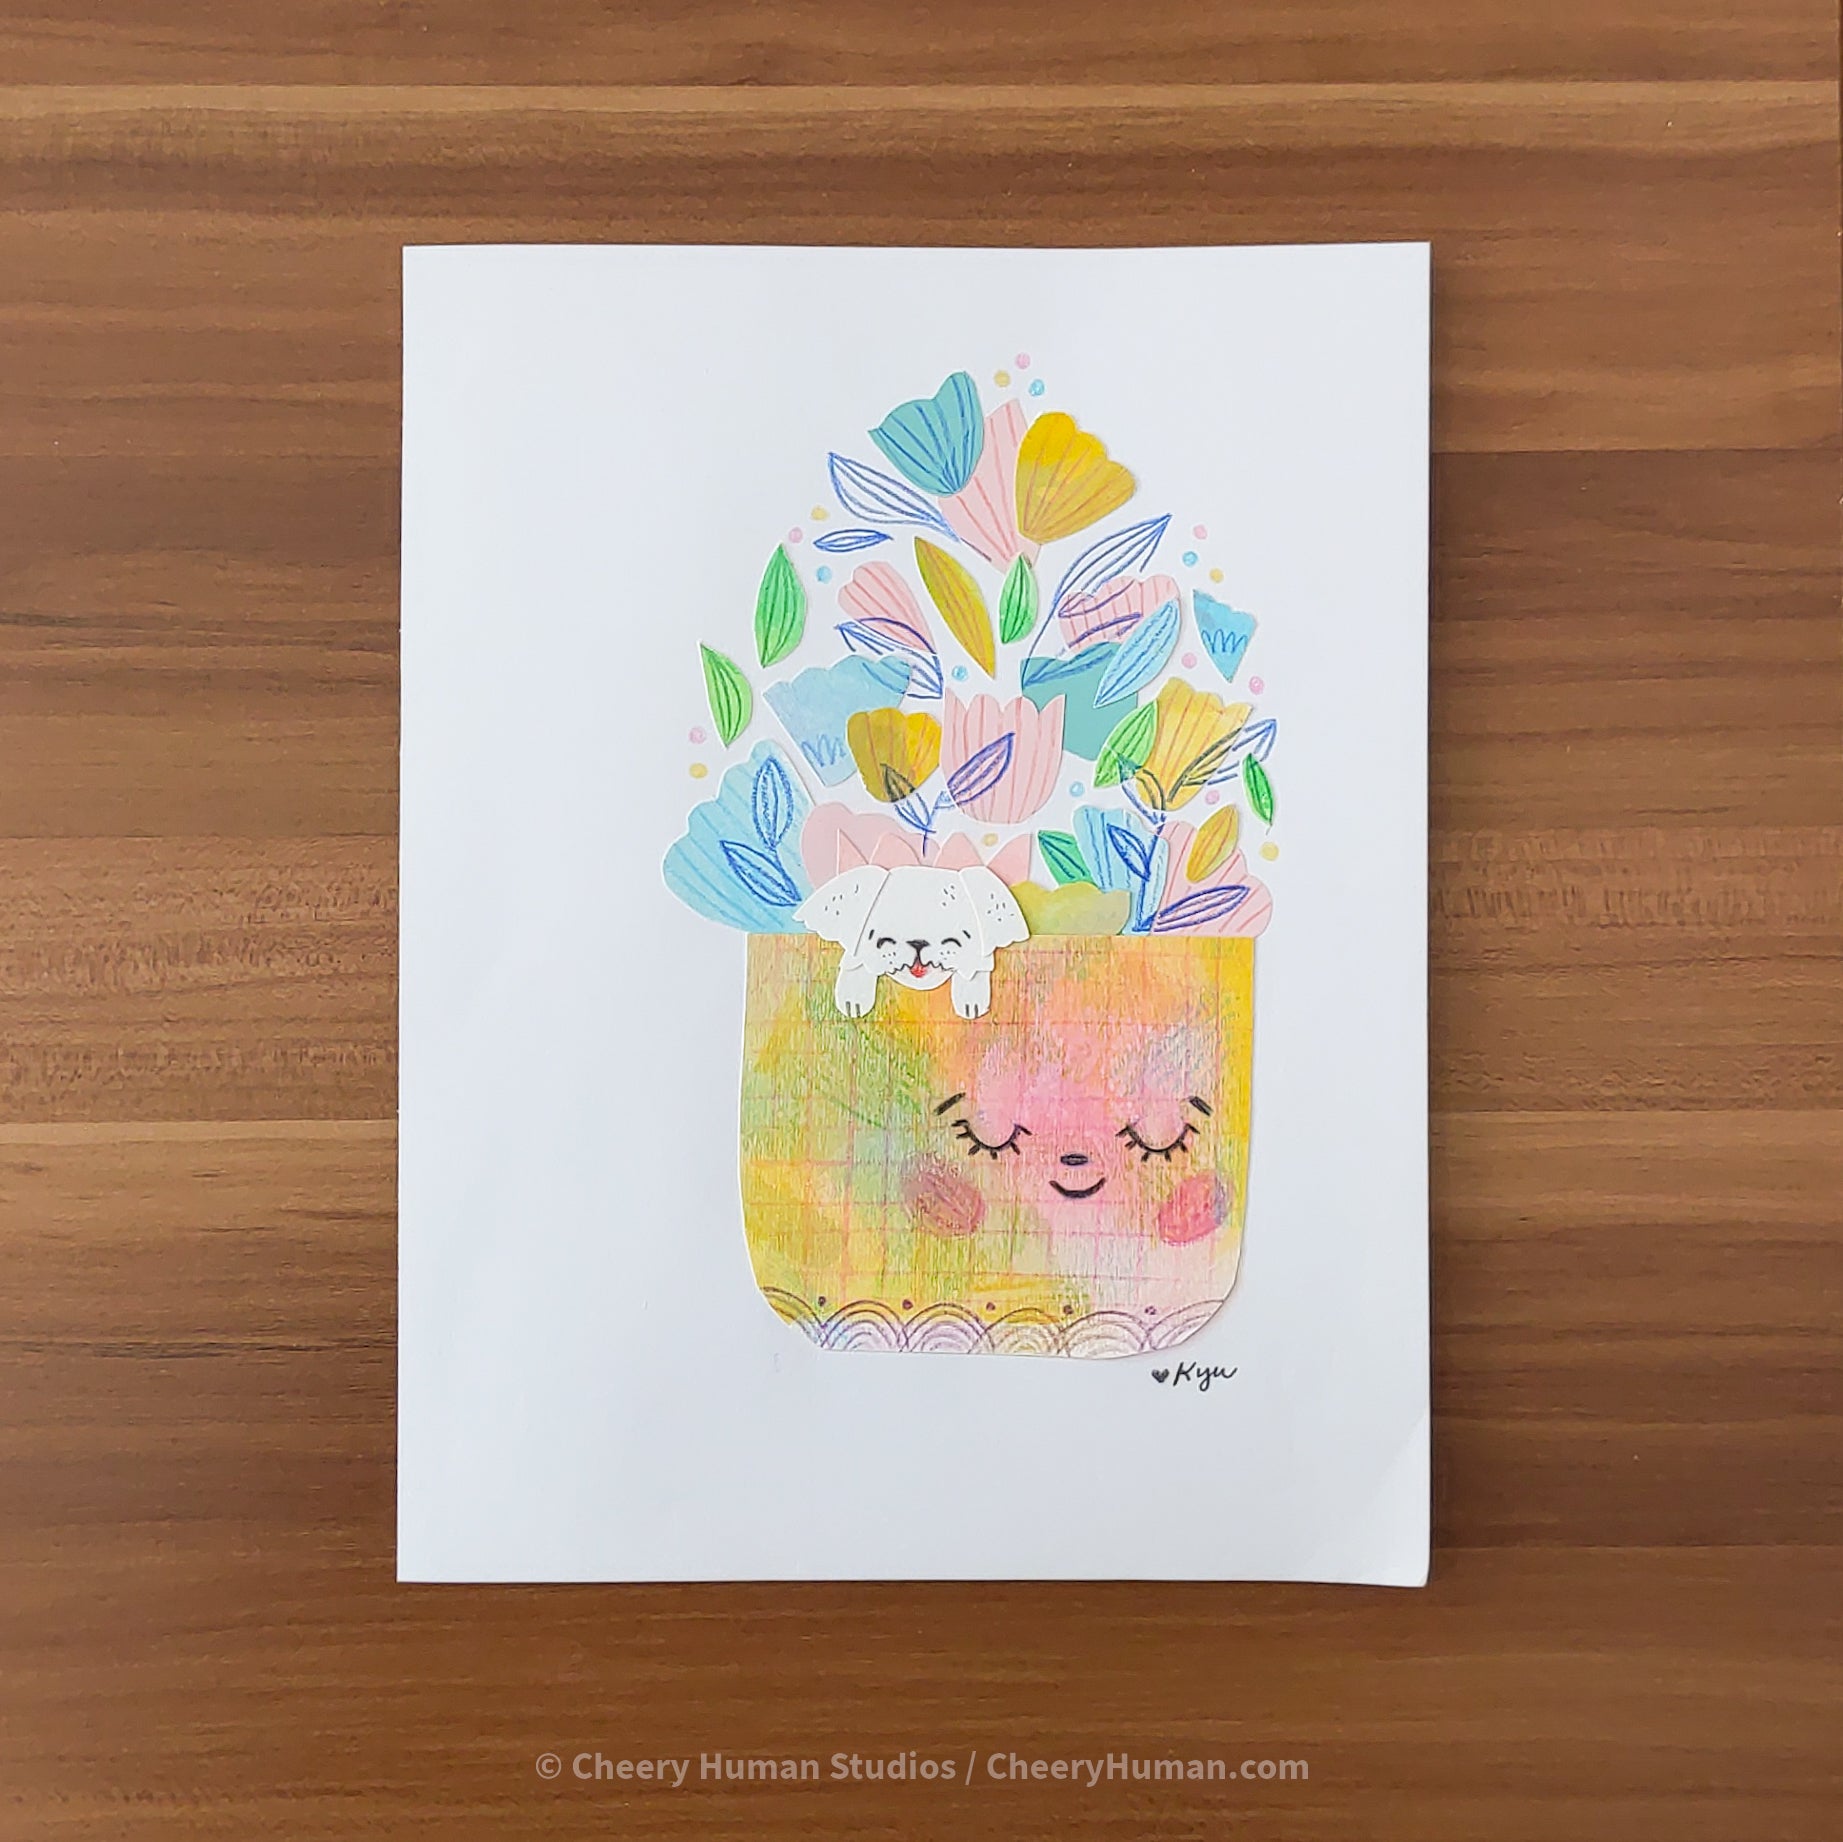 *PAPER ART ORIGINAL* Cheery Dog + Flowers - Original Paper Cut Artwork ✺ Watercolor - Acryla Gouache - Colored Pencil Art